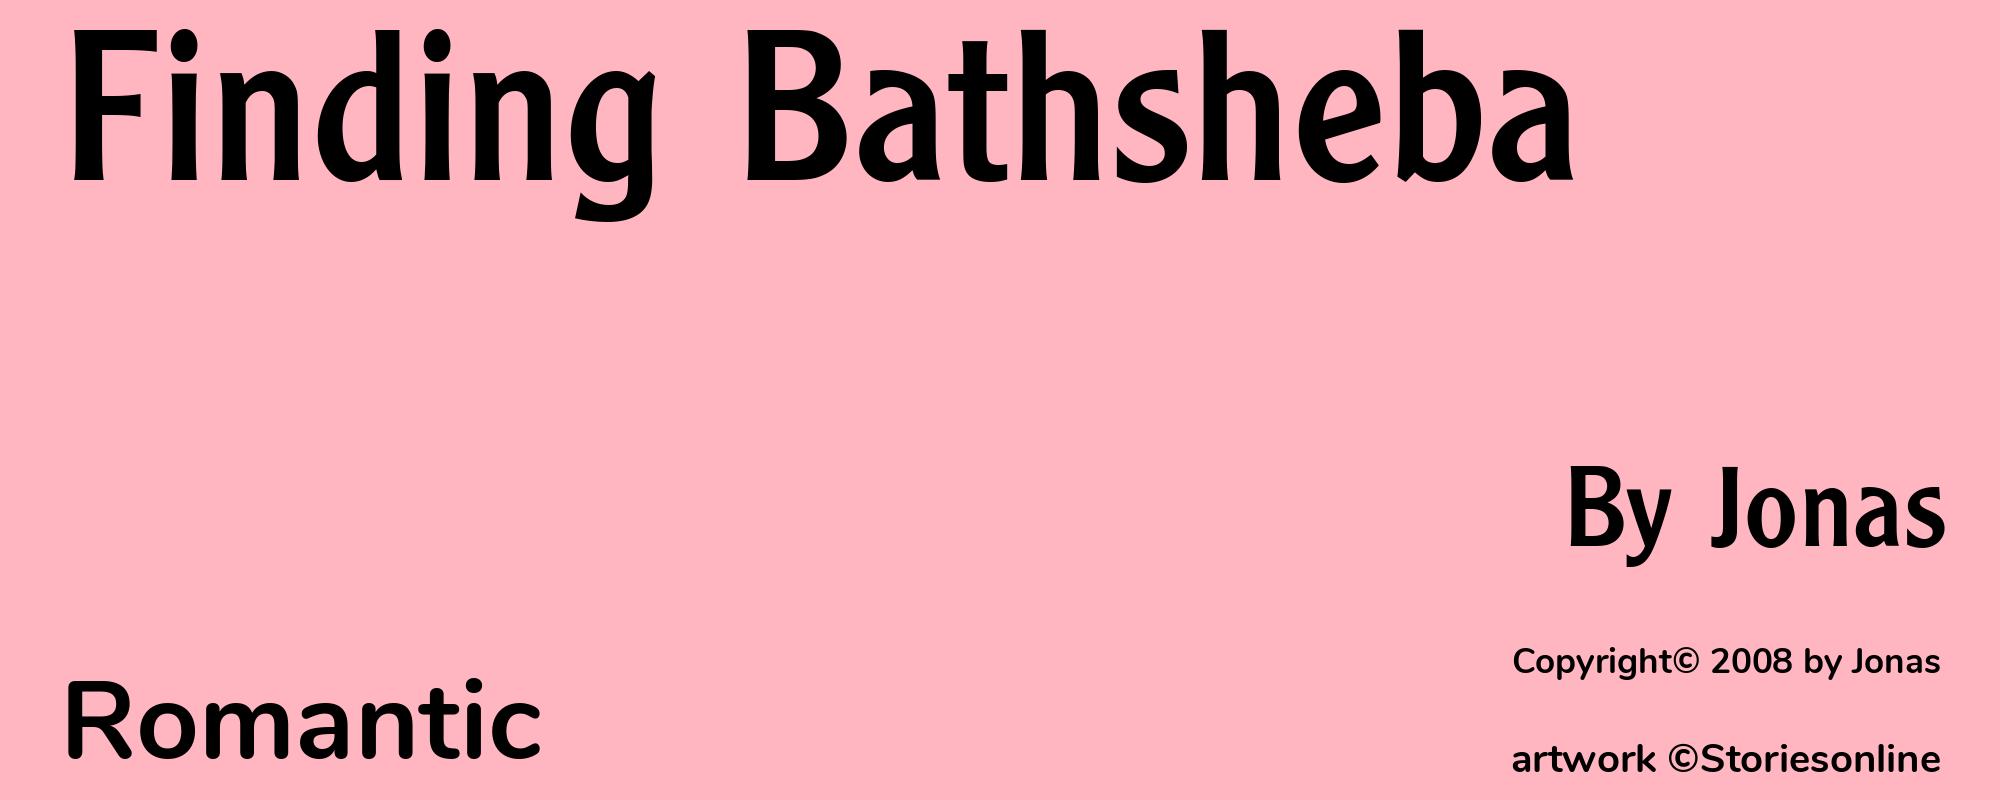 Finding Bathsheba - Cover